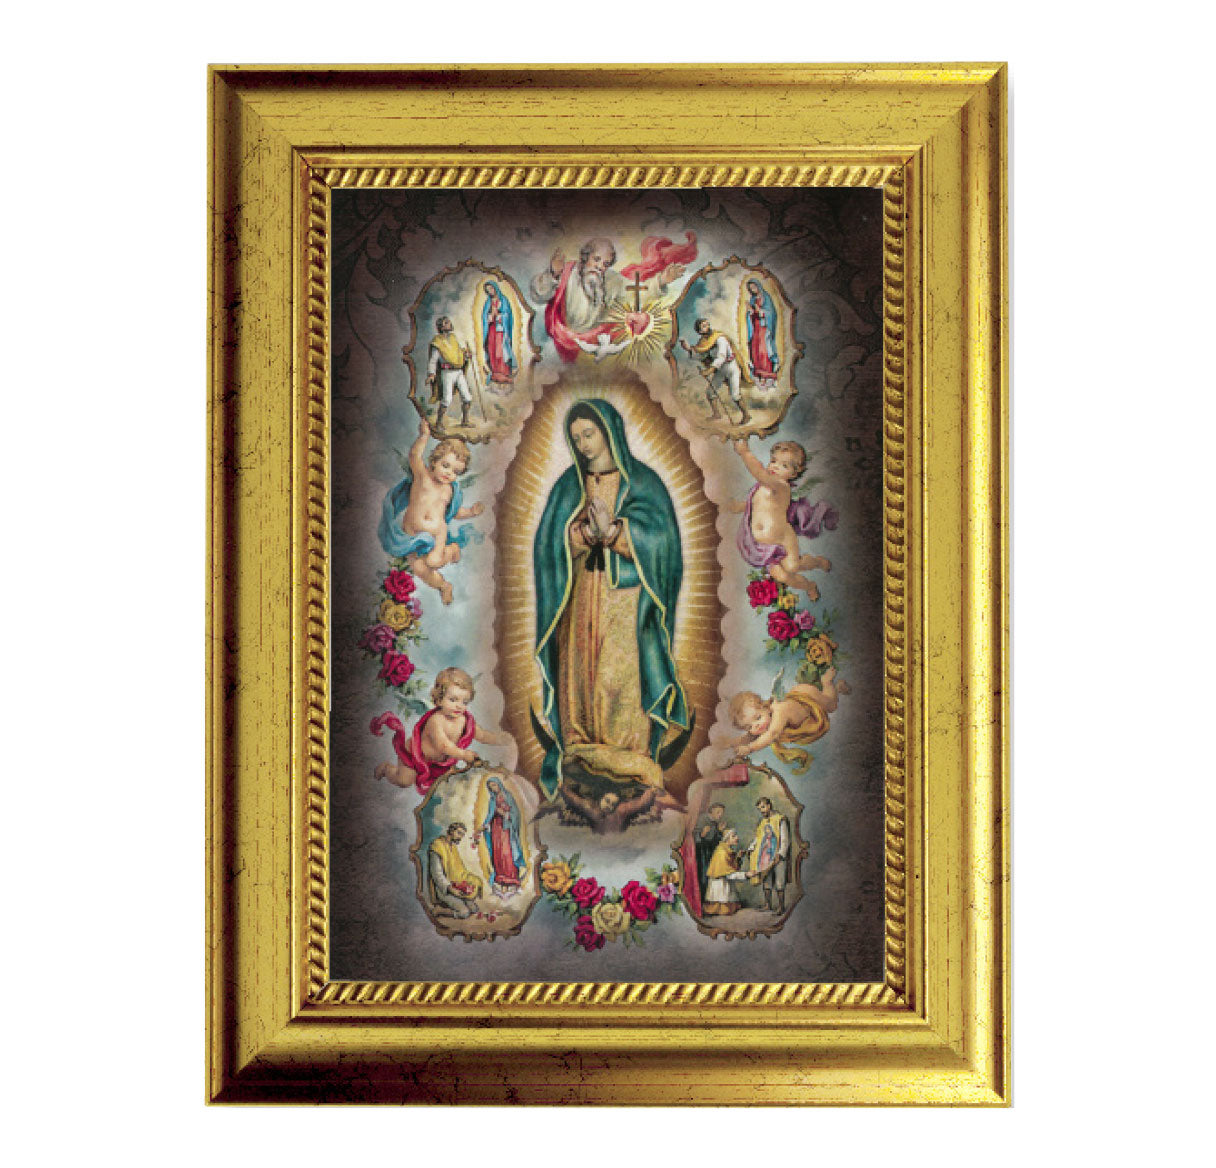 Our Lady of Guadalupe Gold-Leaf Framed Art